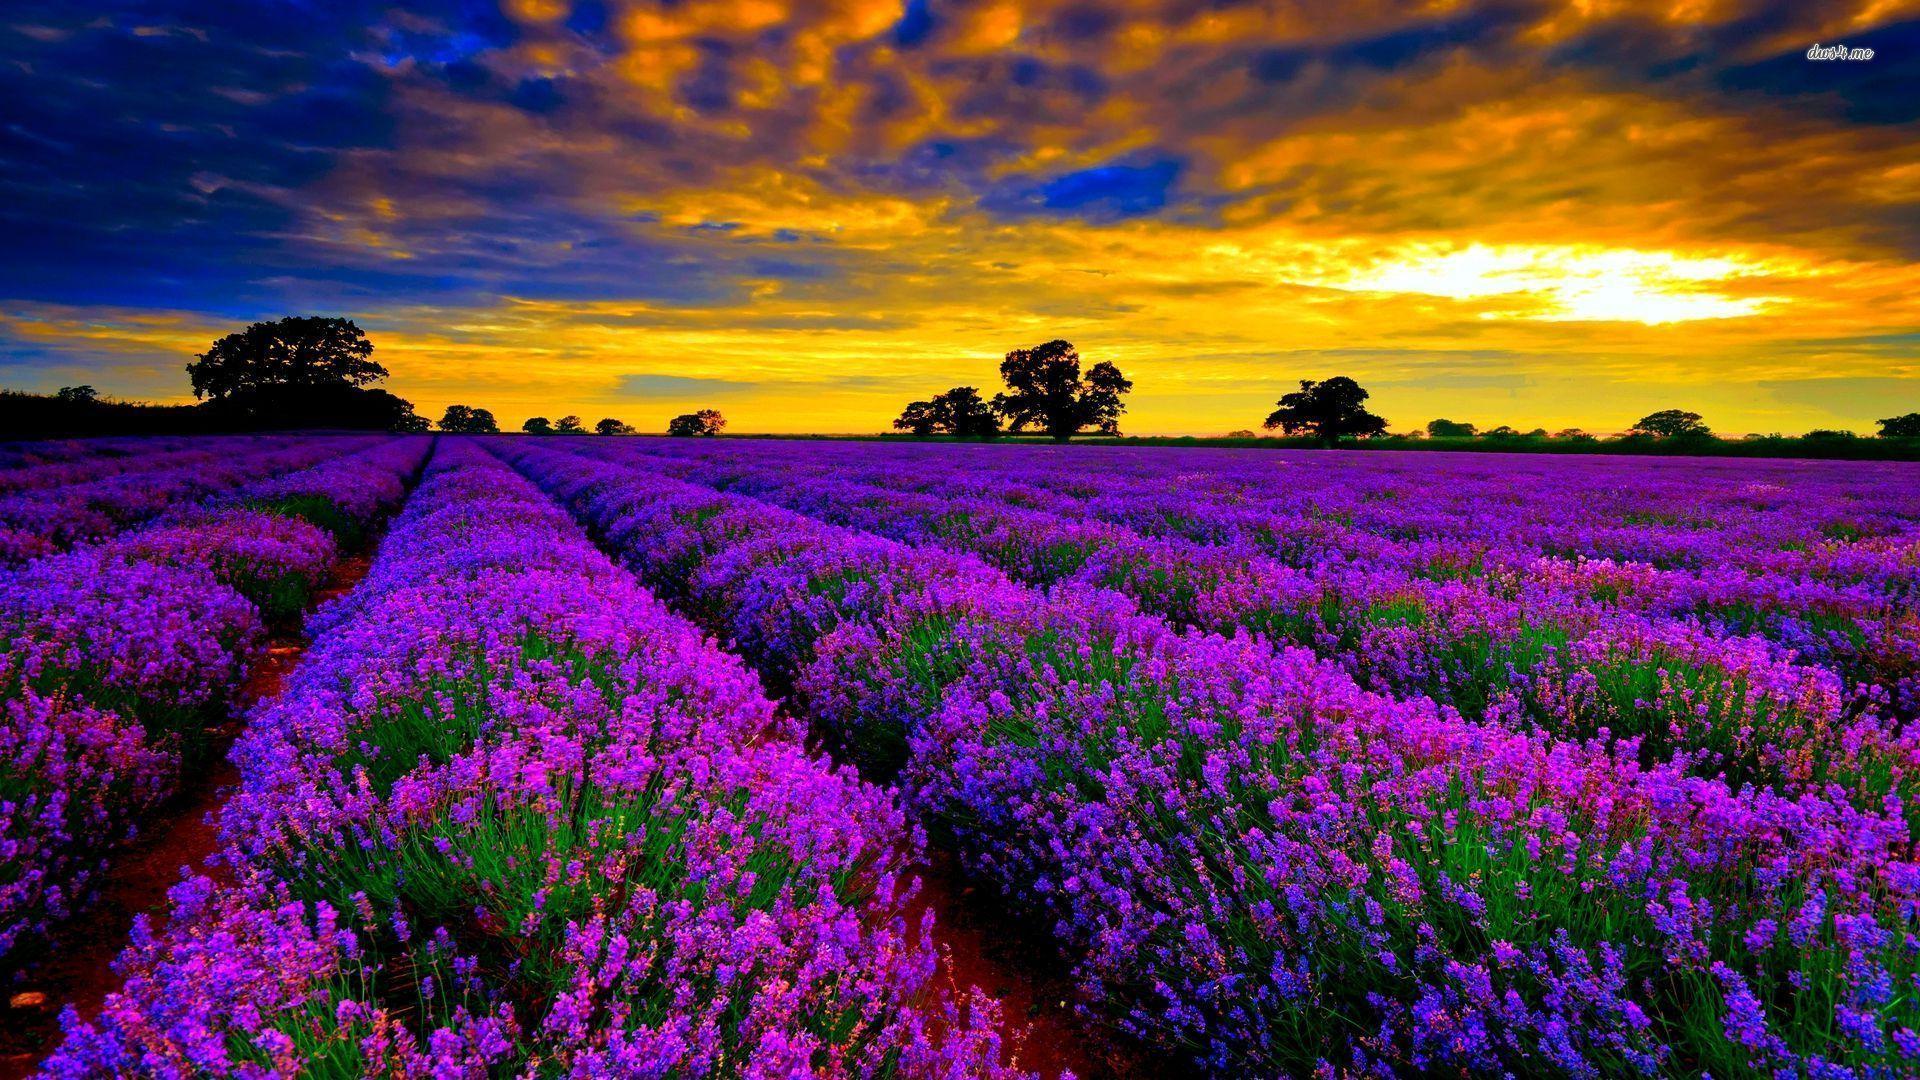 Lavender Field Sunset Wallpaper Free Lavender Field Sunset